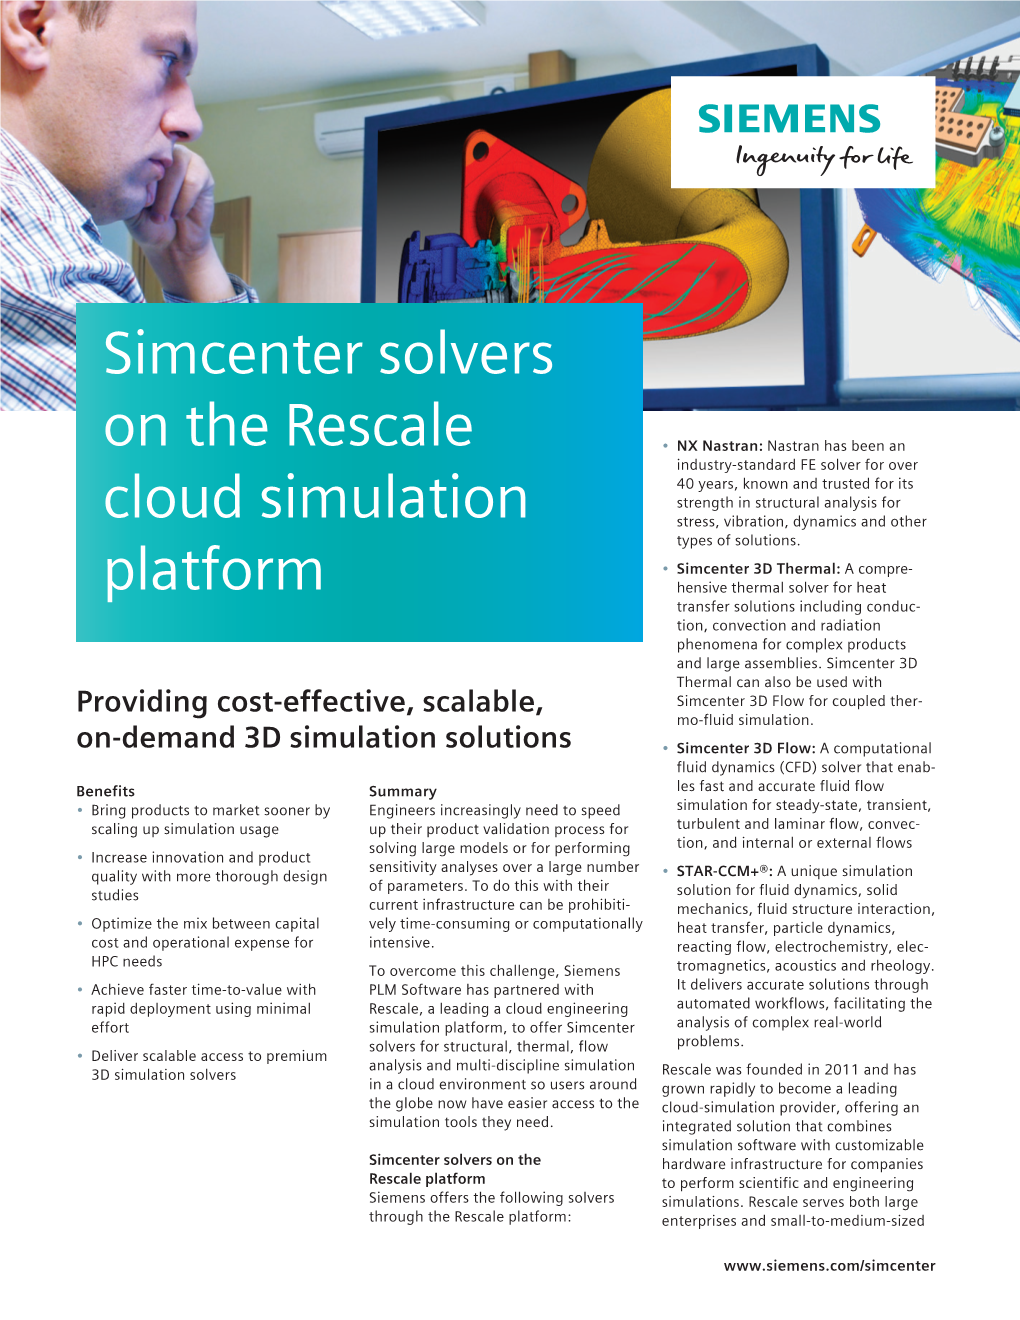 Simcenter Solvers on the Rescale Cloud Simulation Platform